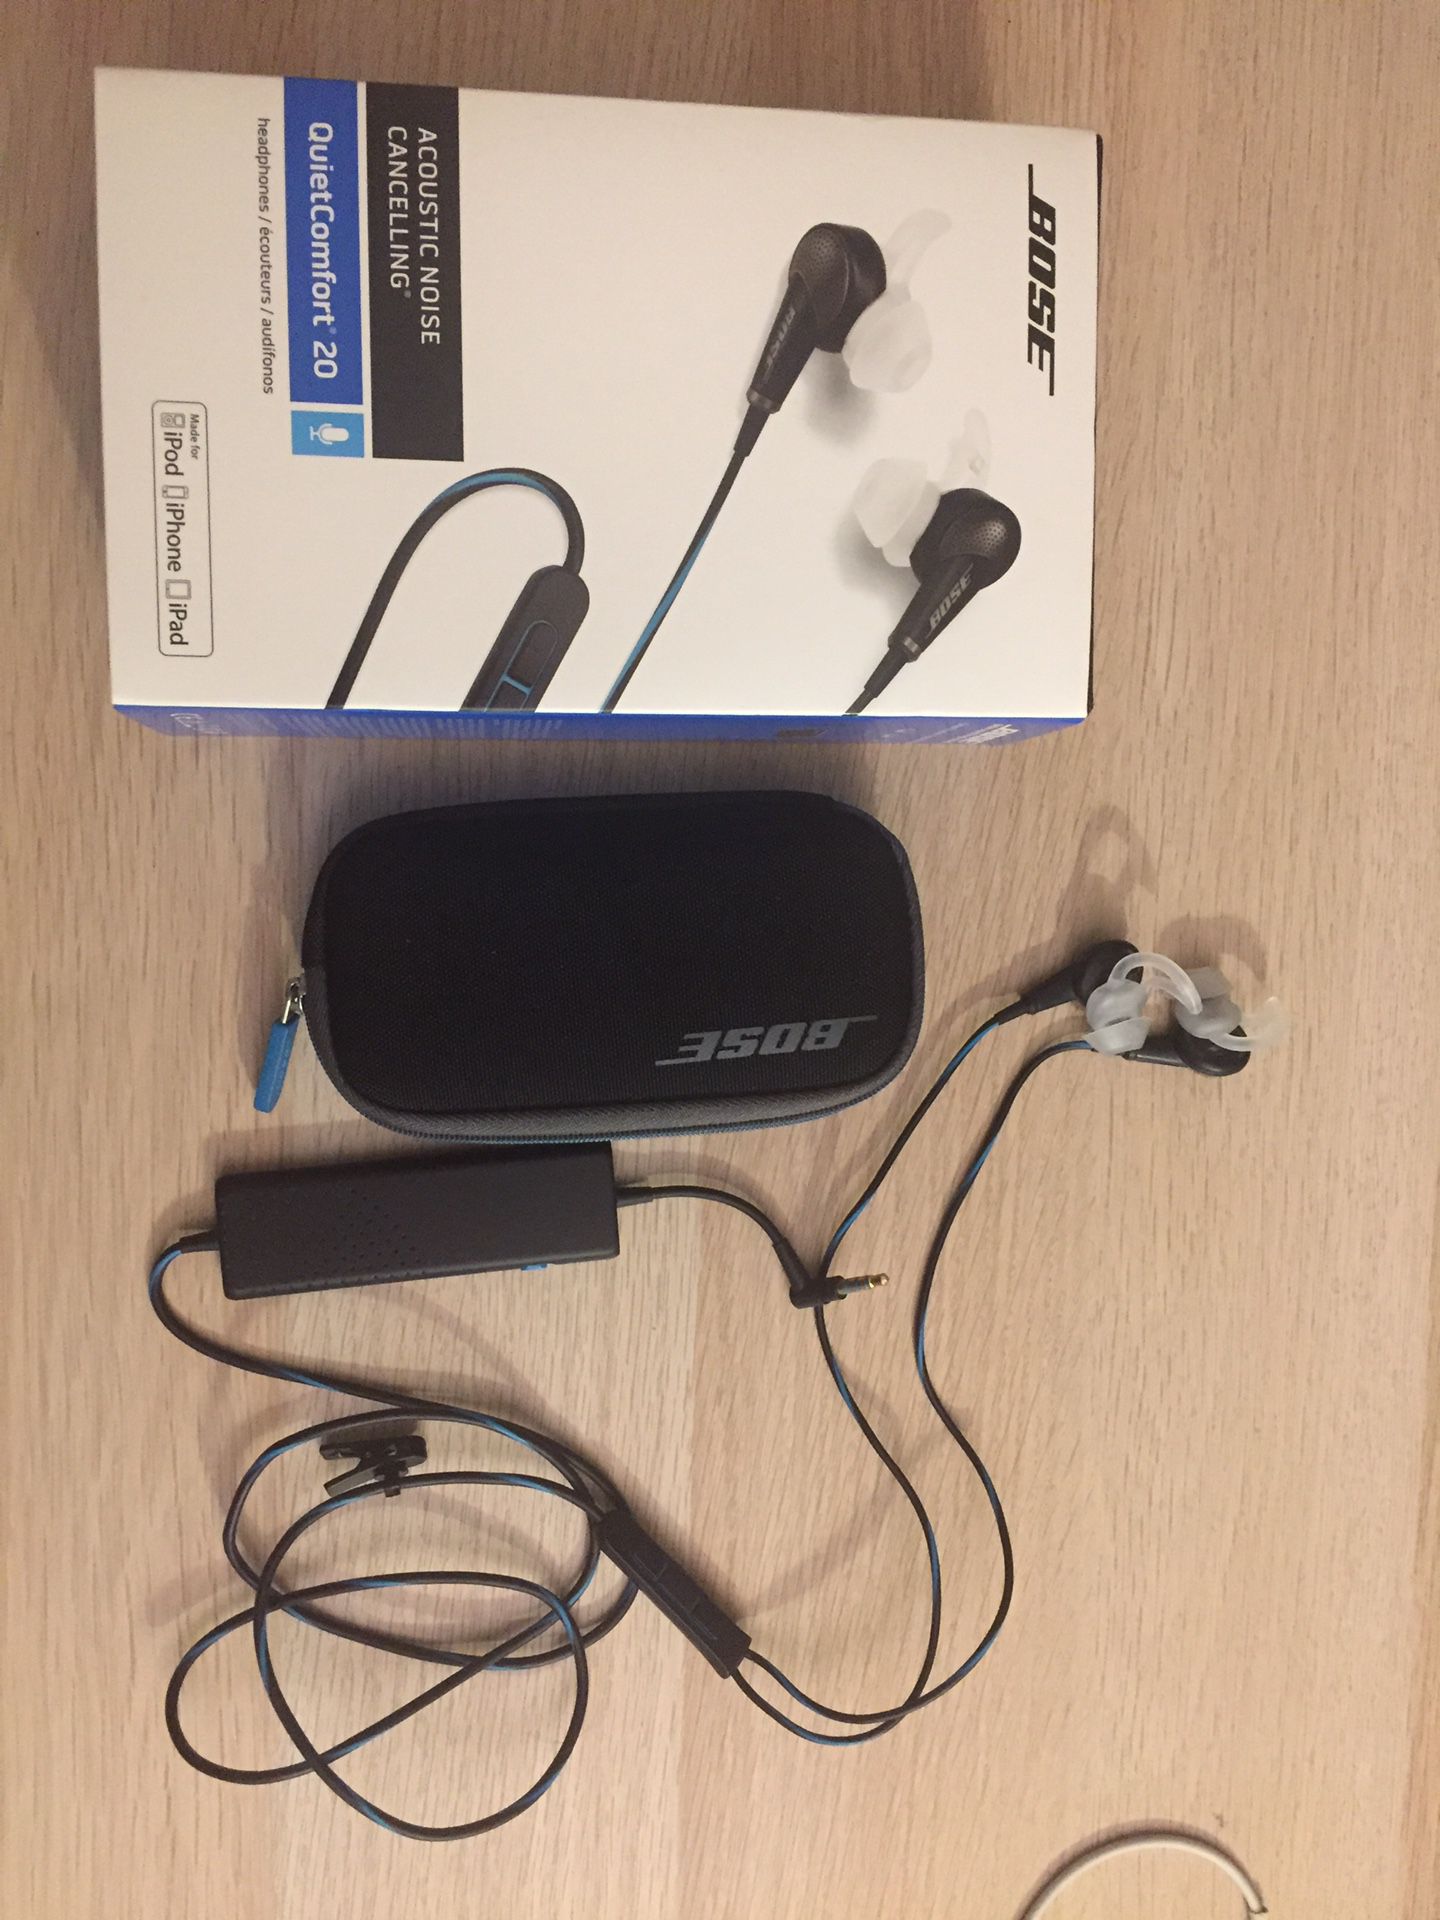 Bose QuietComfort 20 Acoustic Noise Cancelling headphones earphone